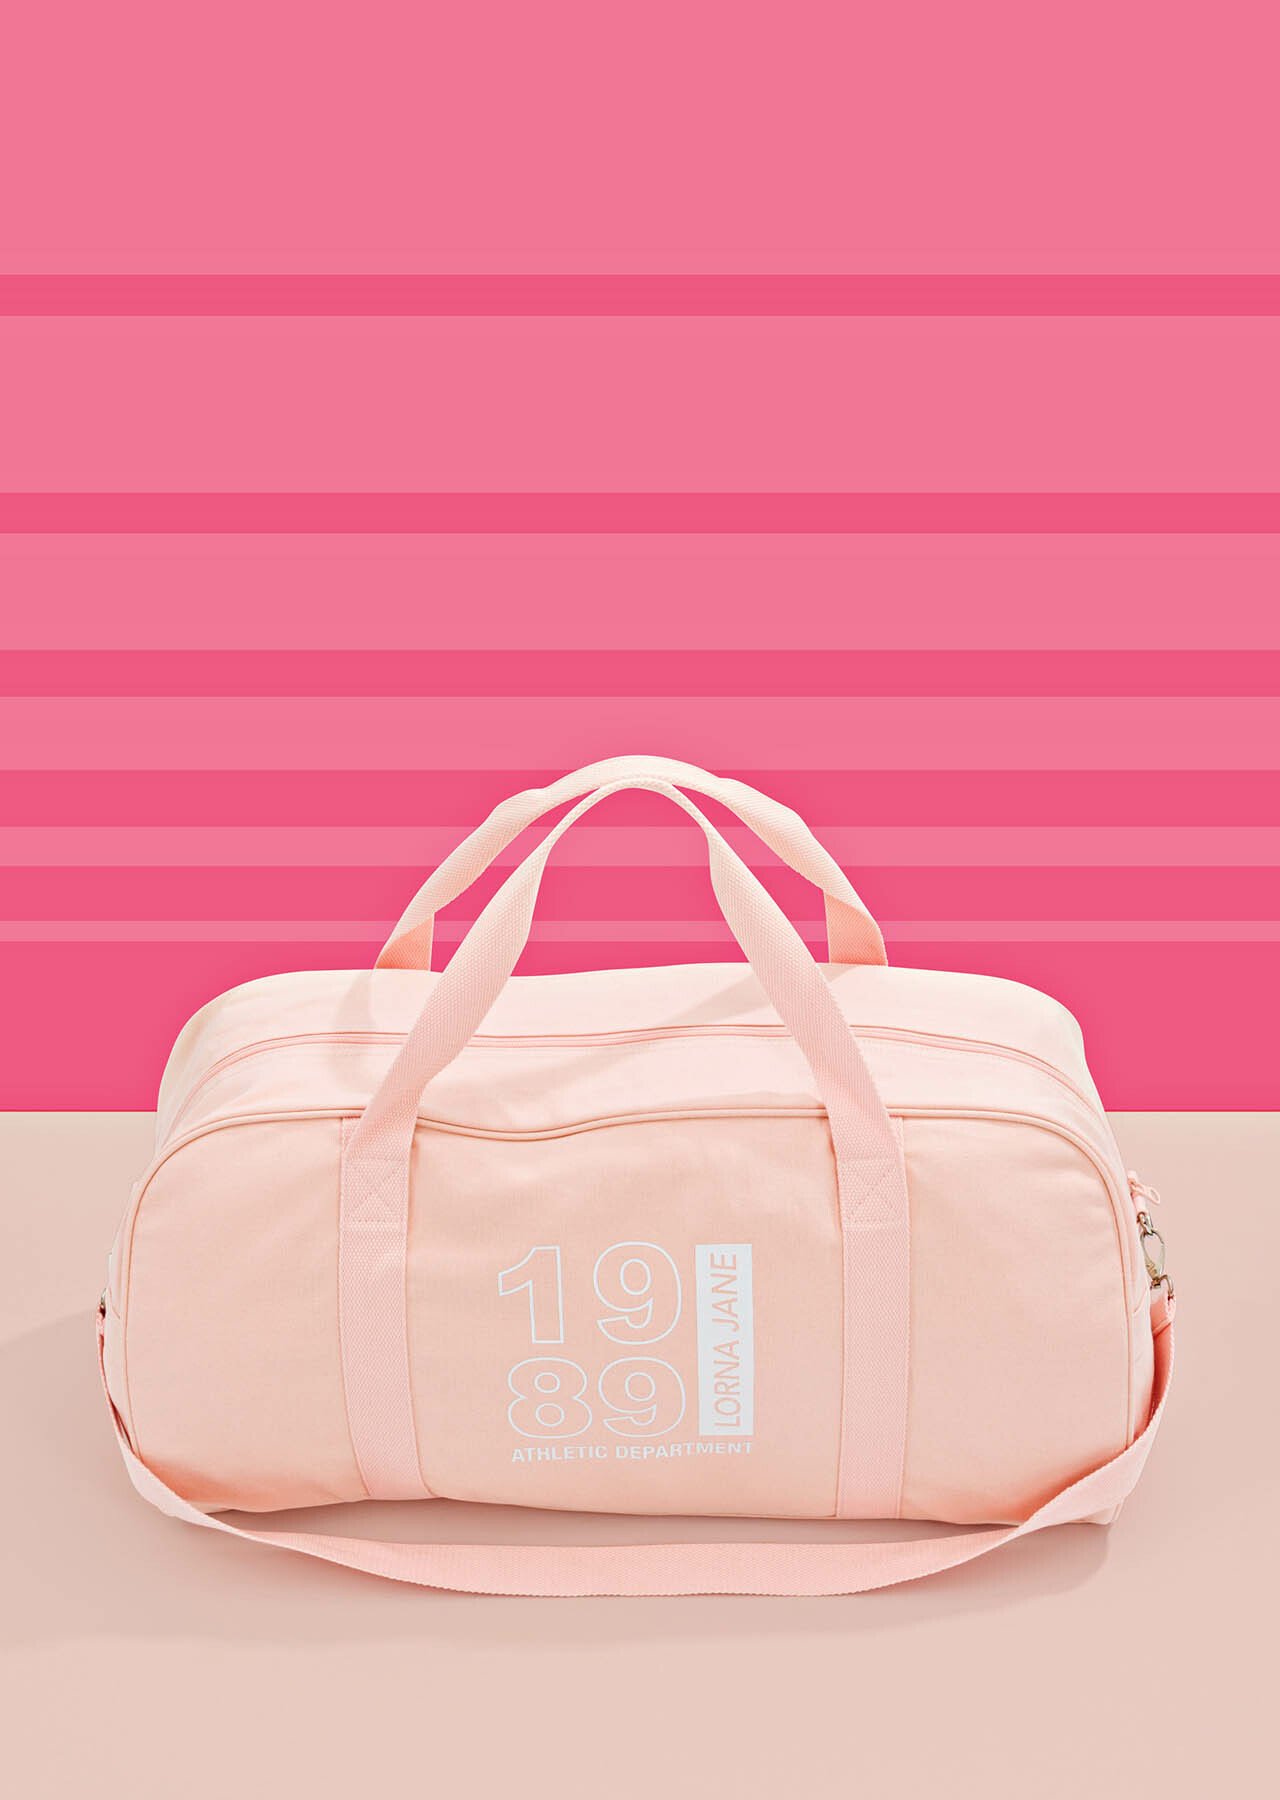 1989 Canvas Duffle Bag, Pink